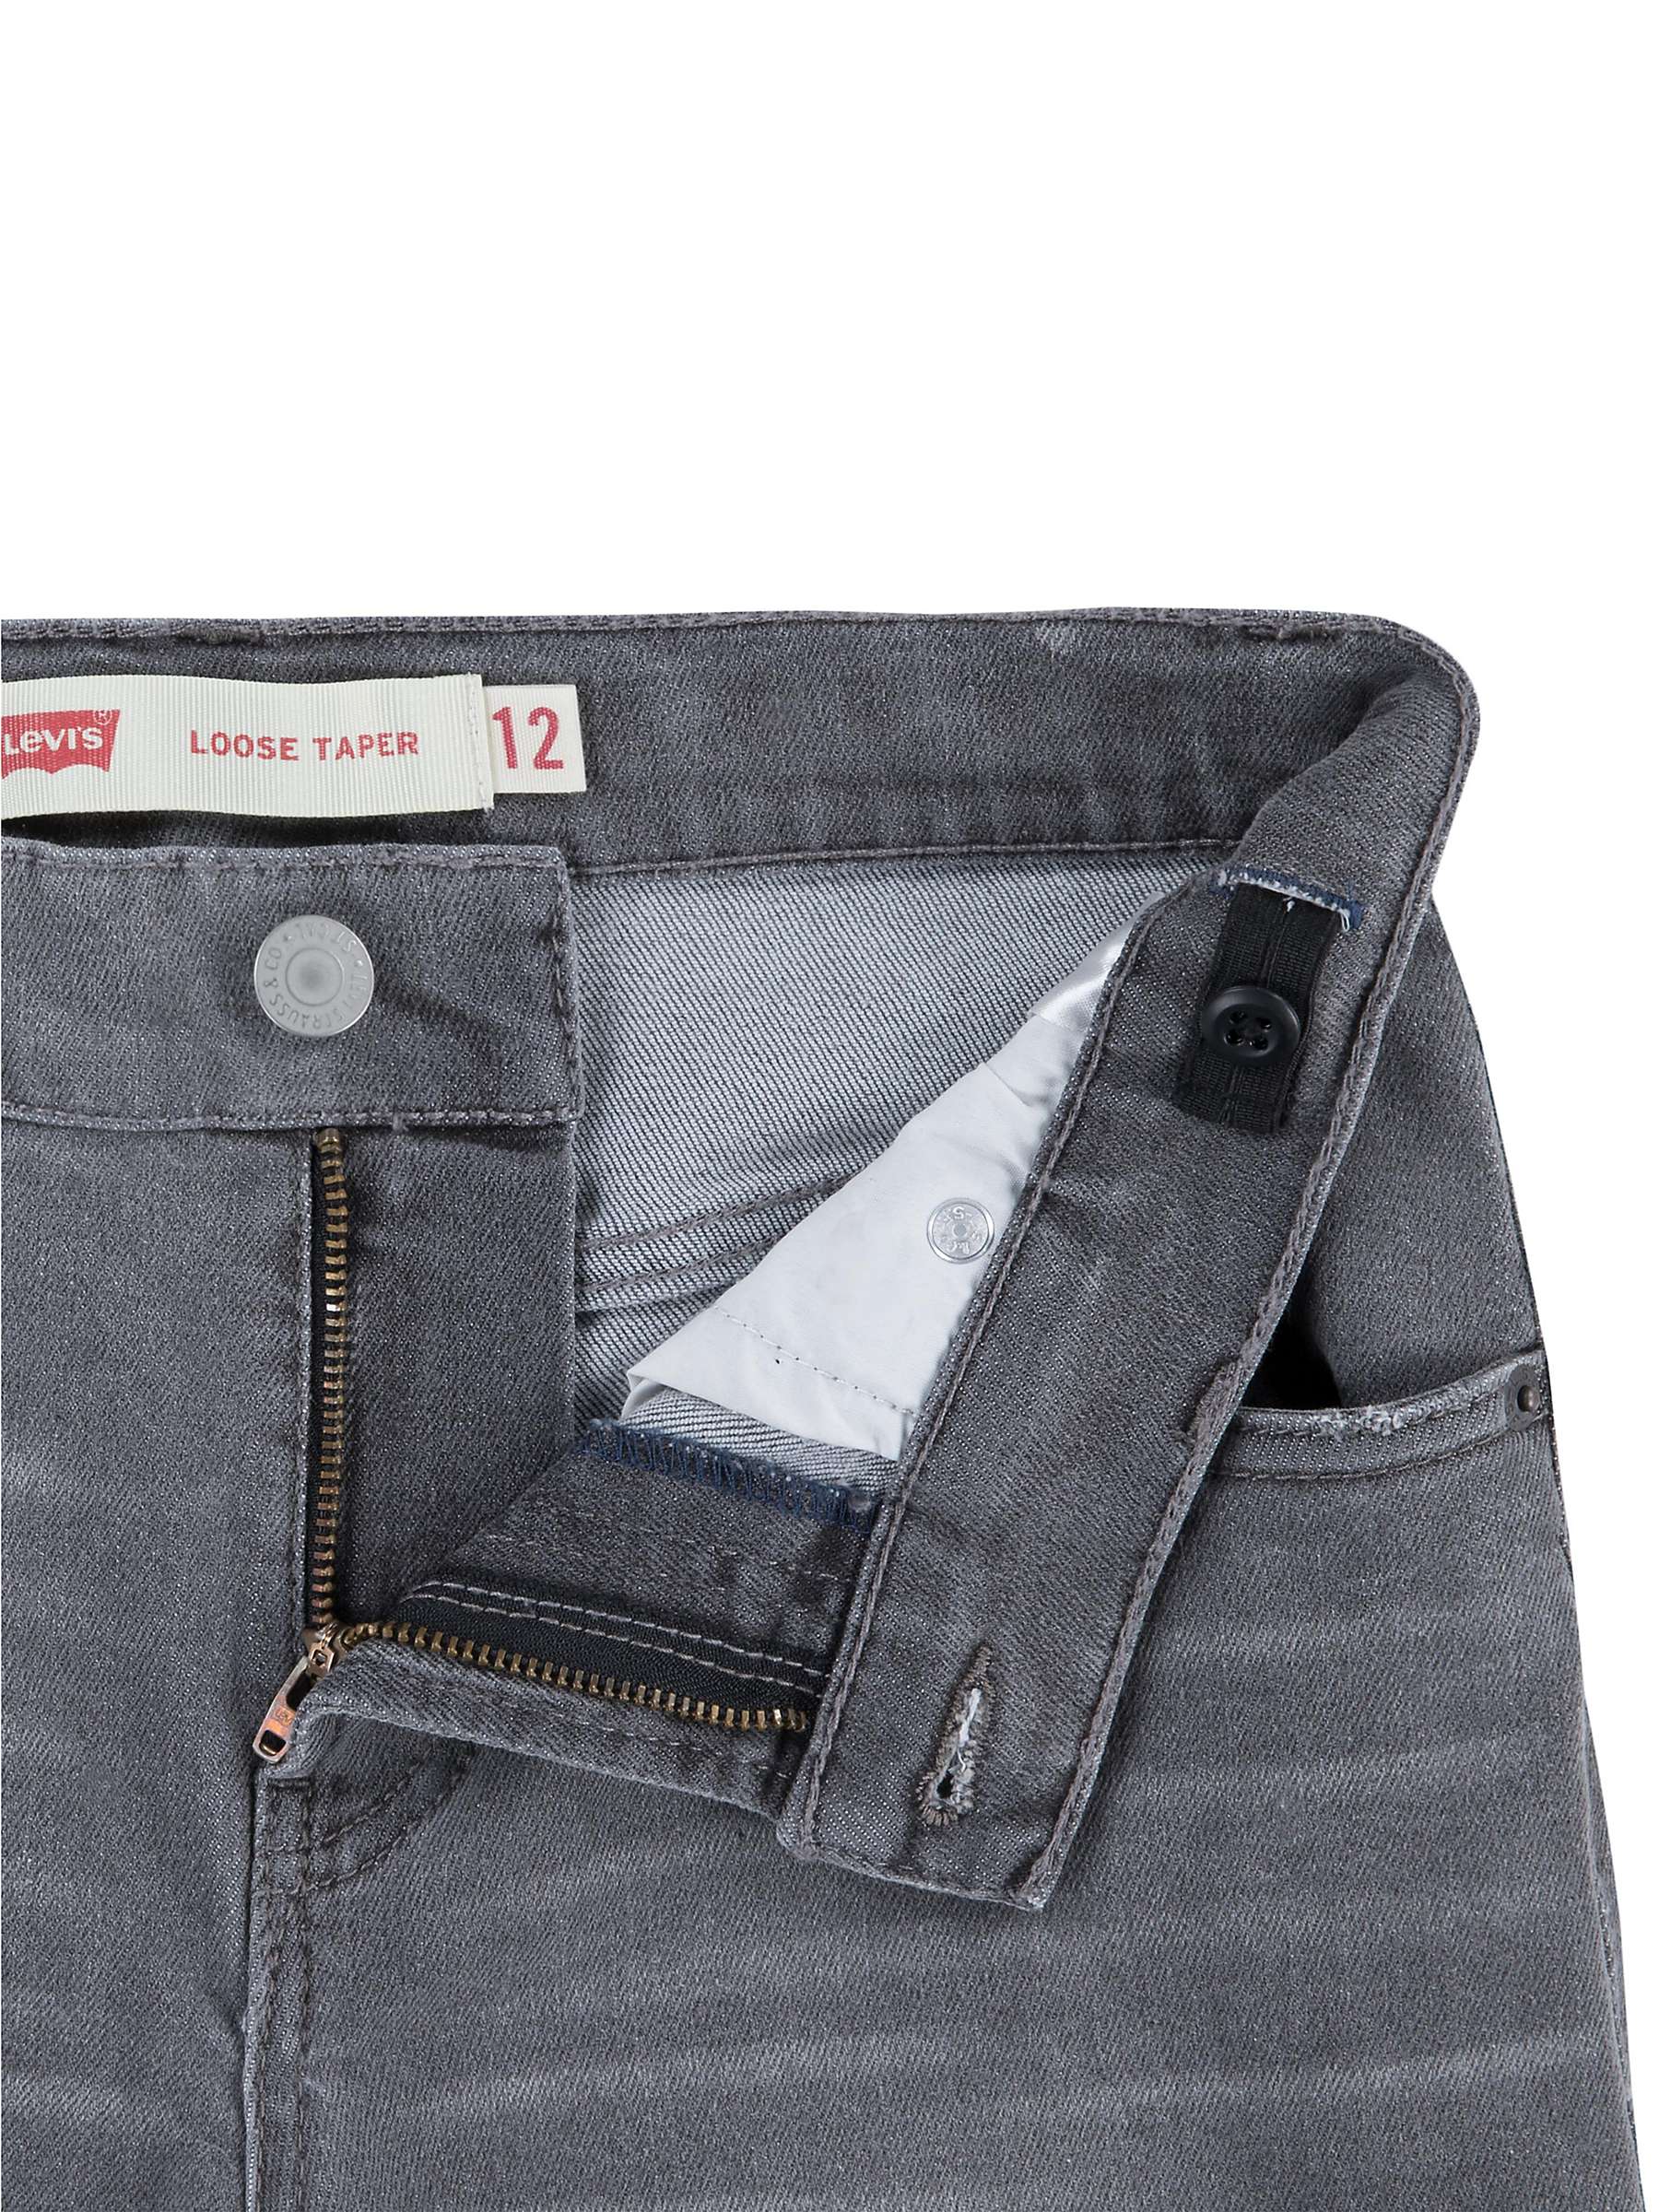 Buy Levi's Kids' Loose Taper Jeans, Graphite Online at johnlewis.com